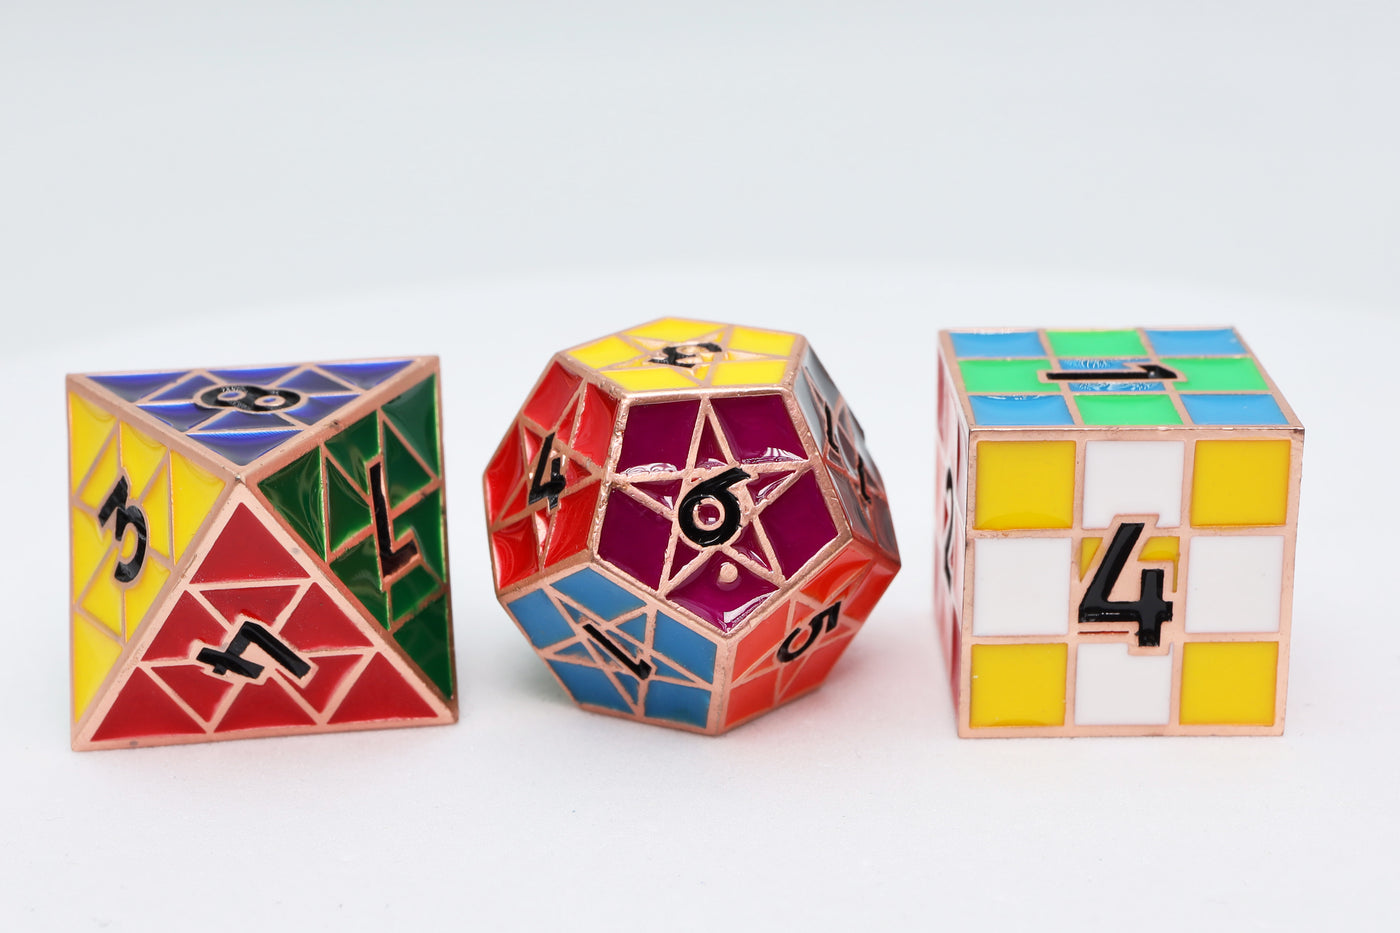 Puzzle Cube: Copper - Metal 8 piece Dice Set Metal Dice Foam Brain Games